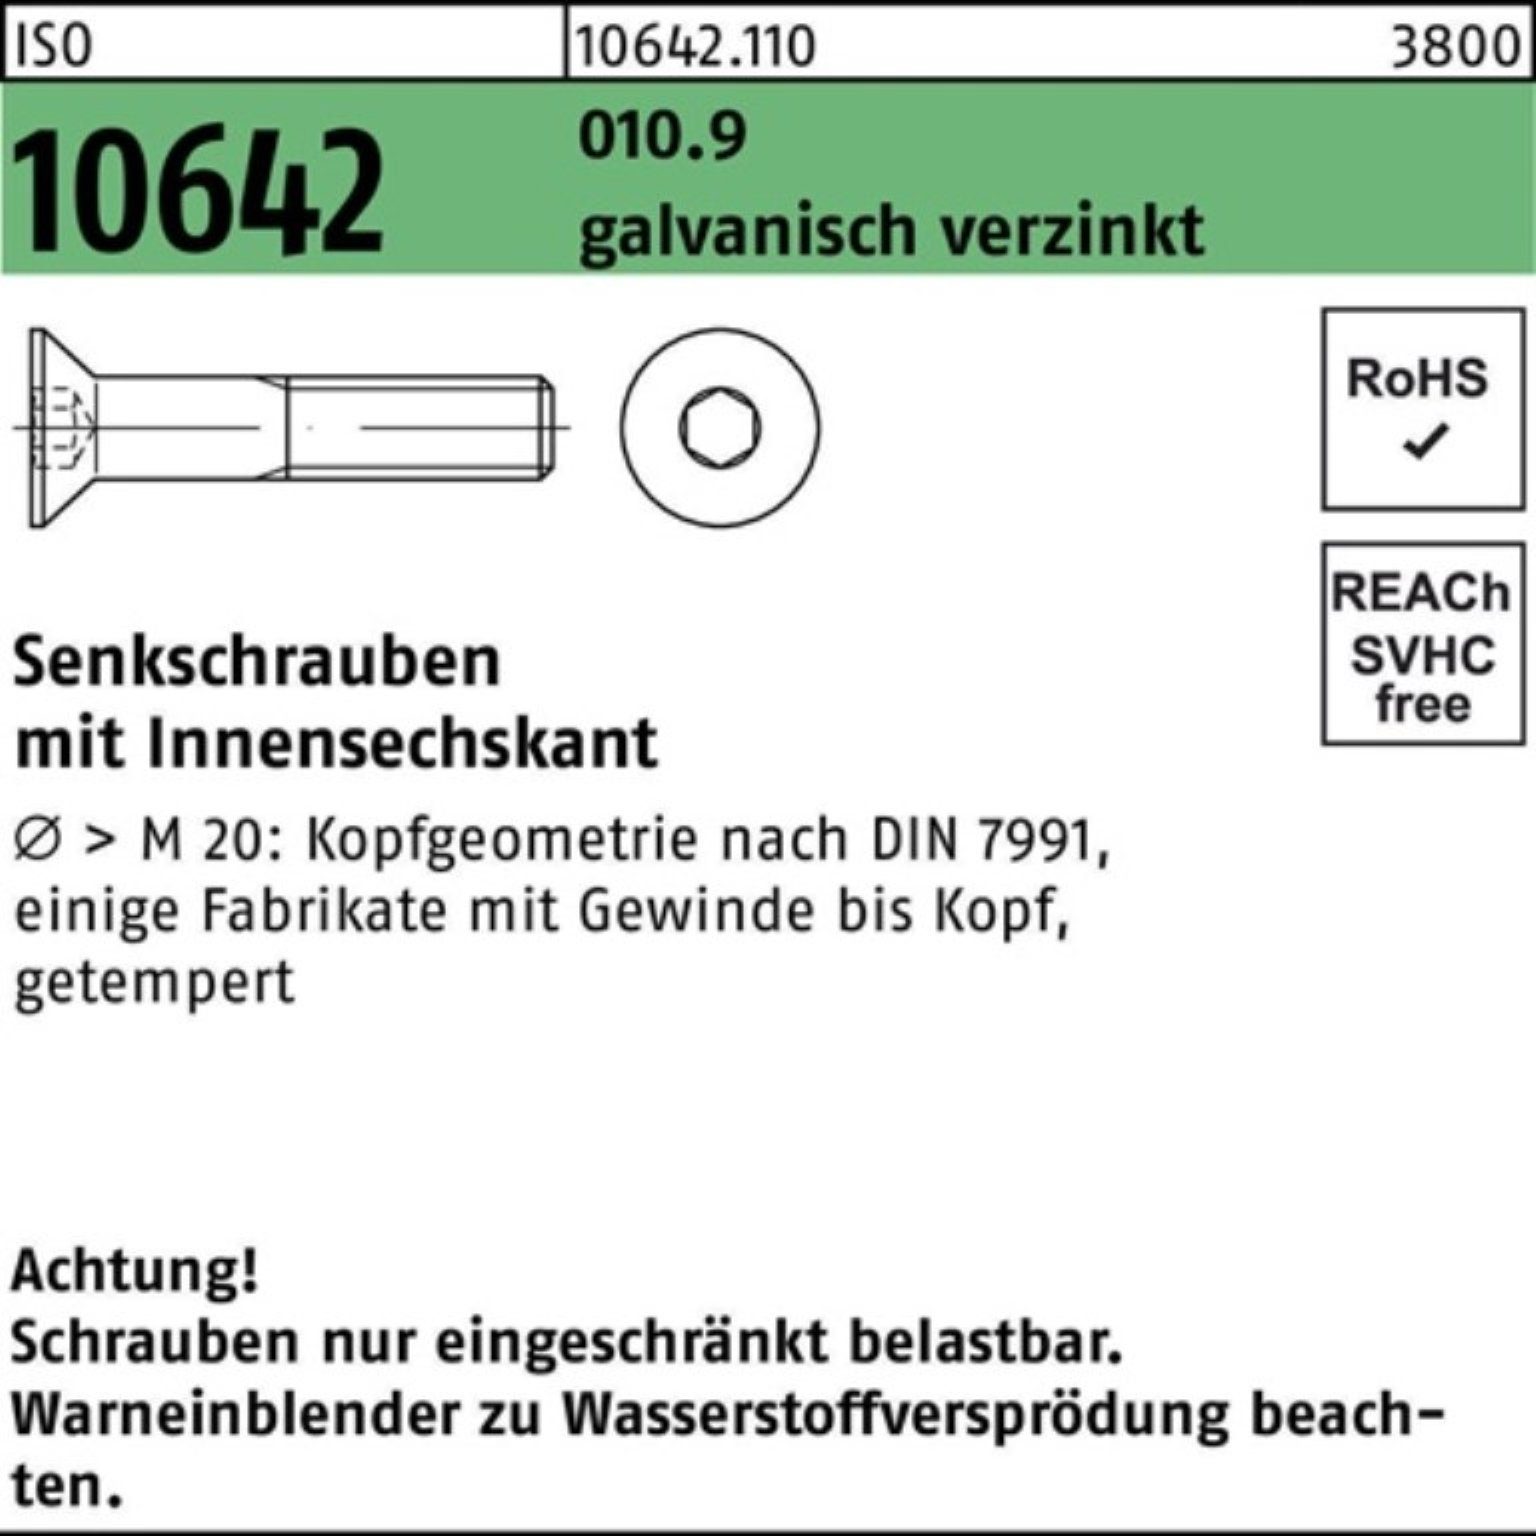 Reyher Senkschraube 200er Pack Senkschraube ISO 10642 Innen-6kt M10x 16 010.9 galv.verz. 2